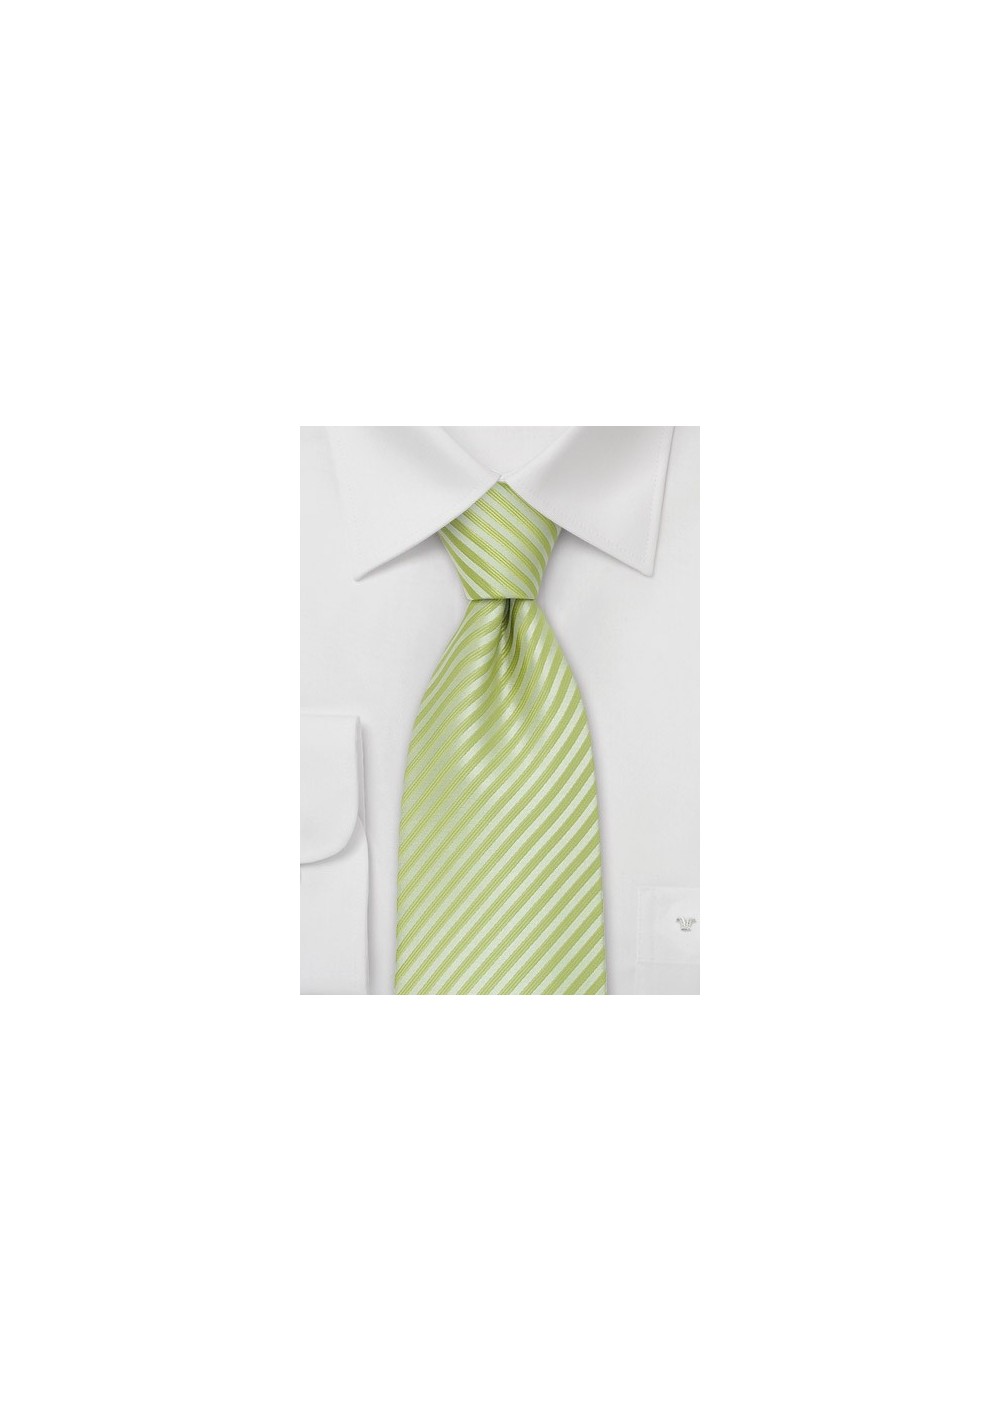 Bright Geen Silk Tie in XL Length